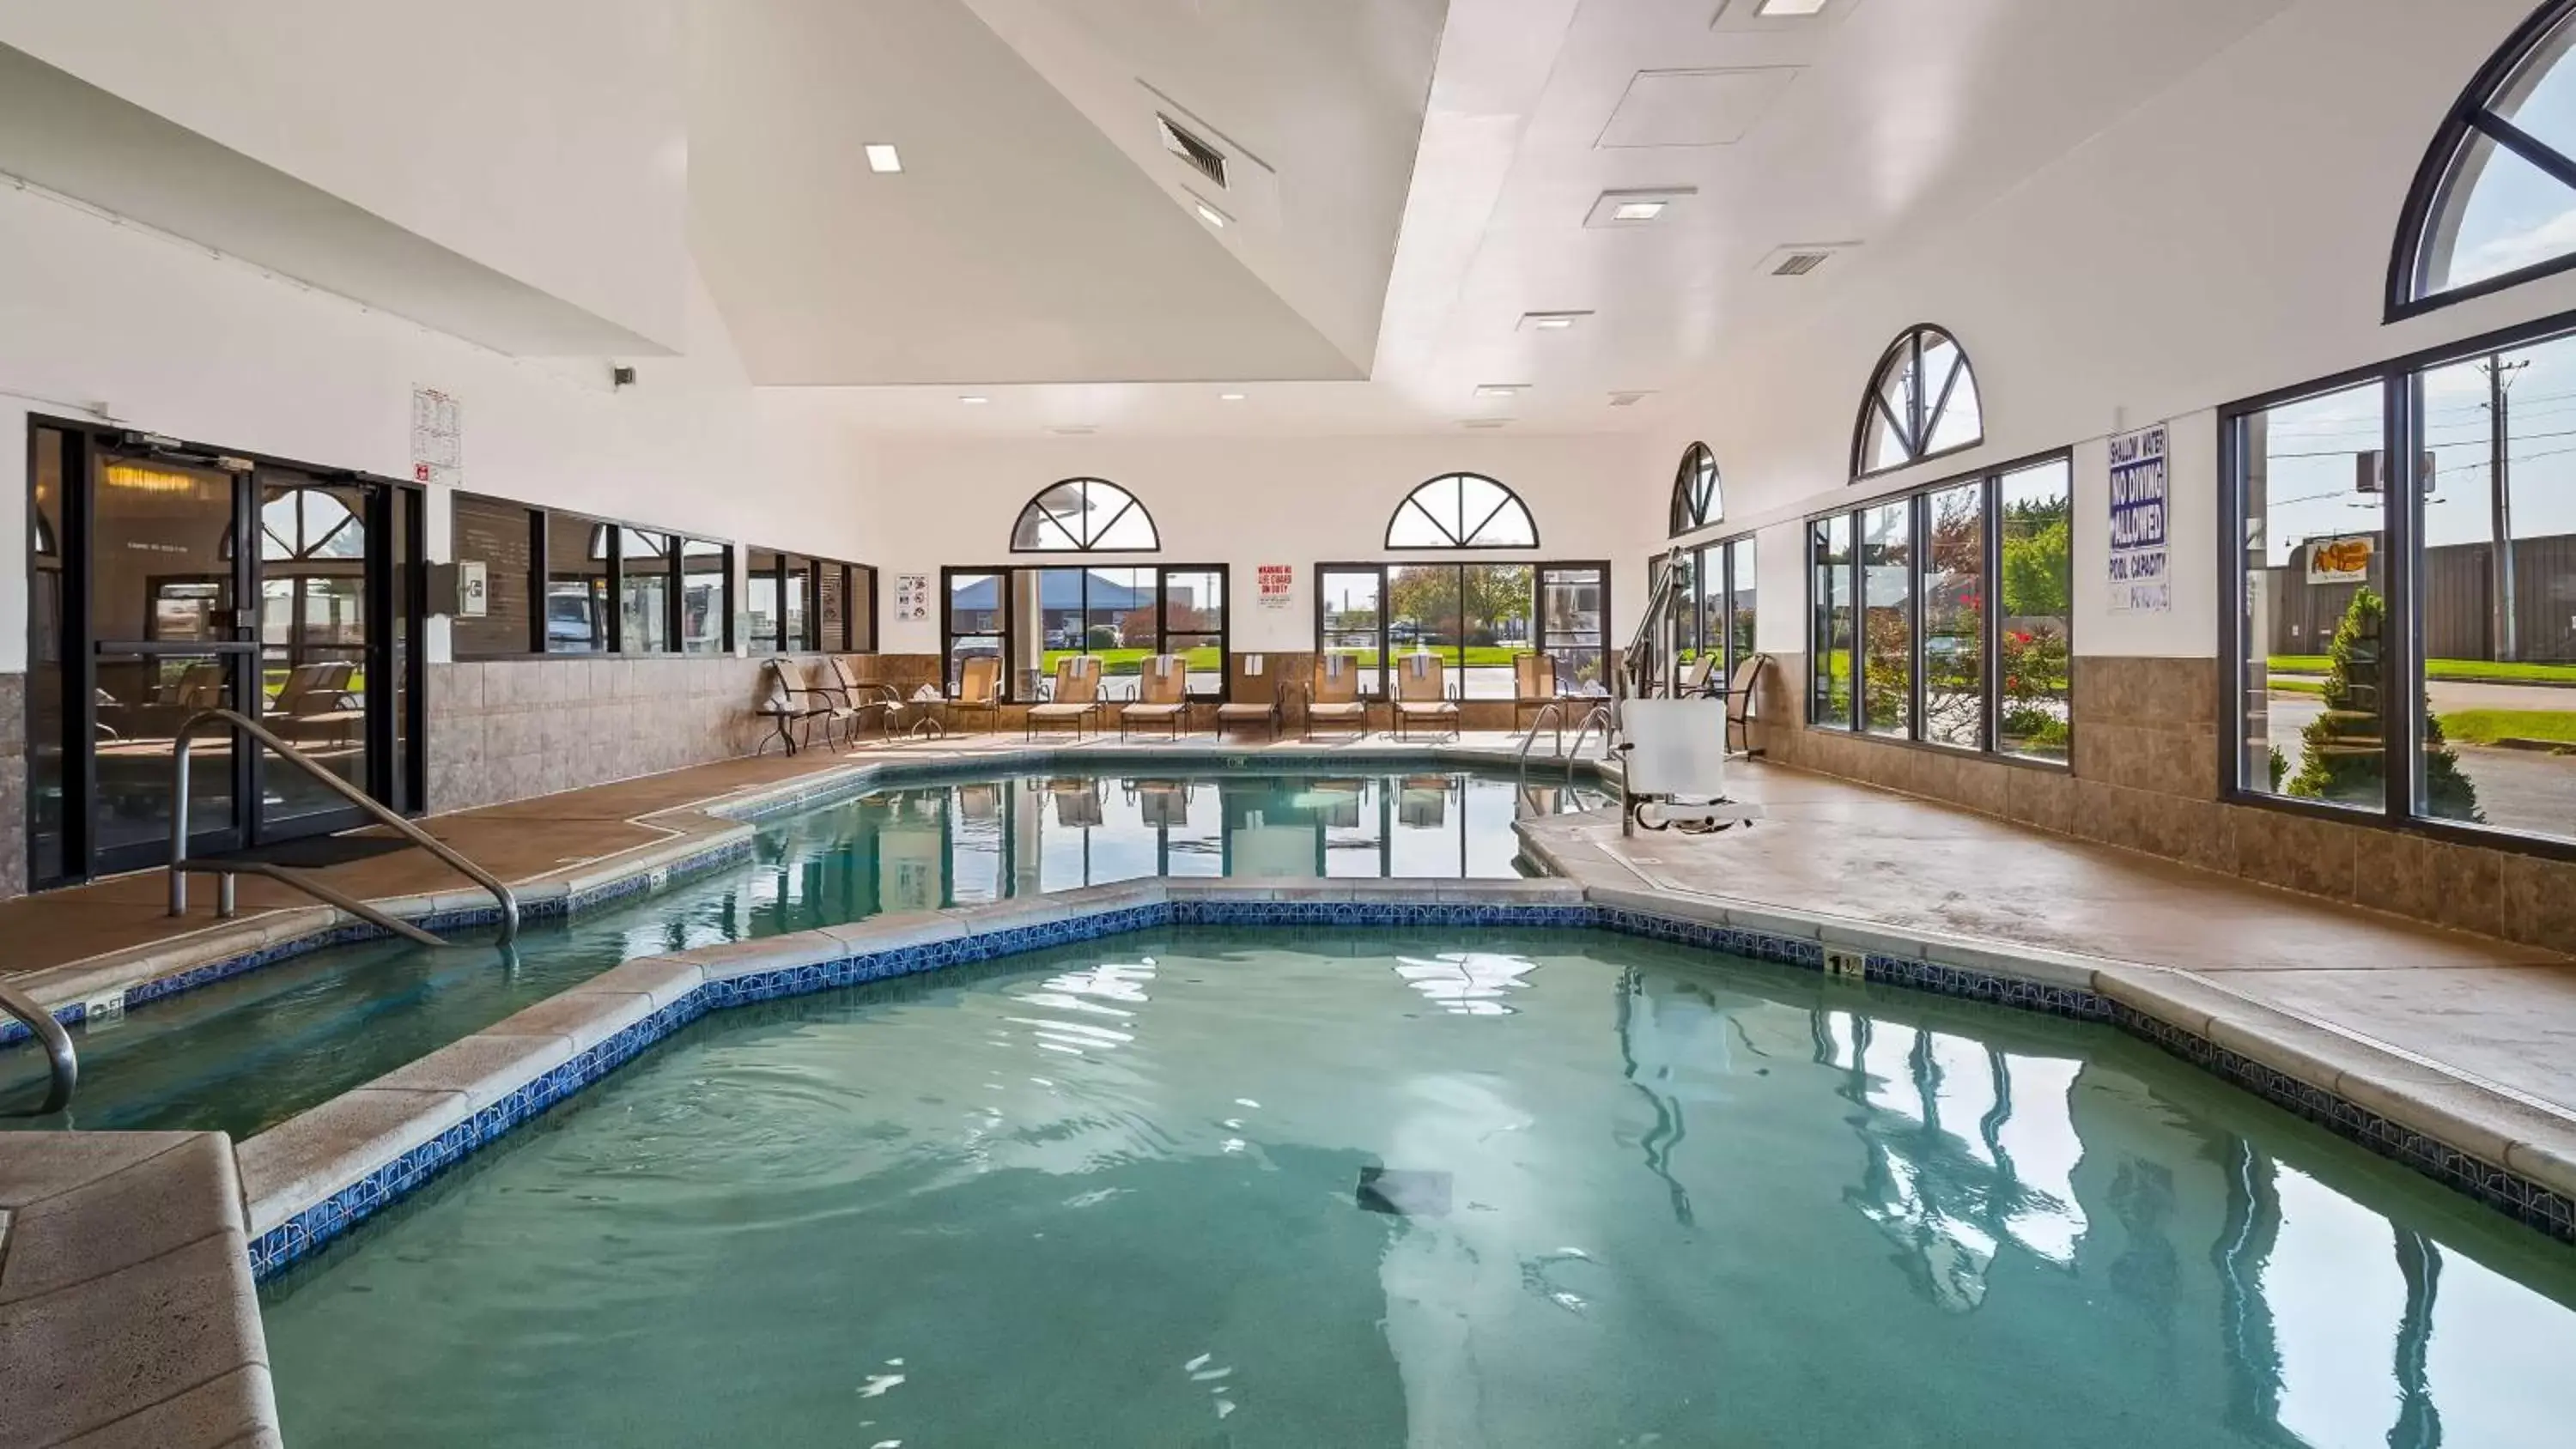 On site, Swimming Pool in Best Western St. Louis Inn